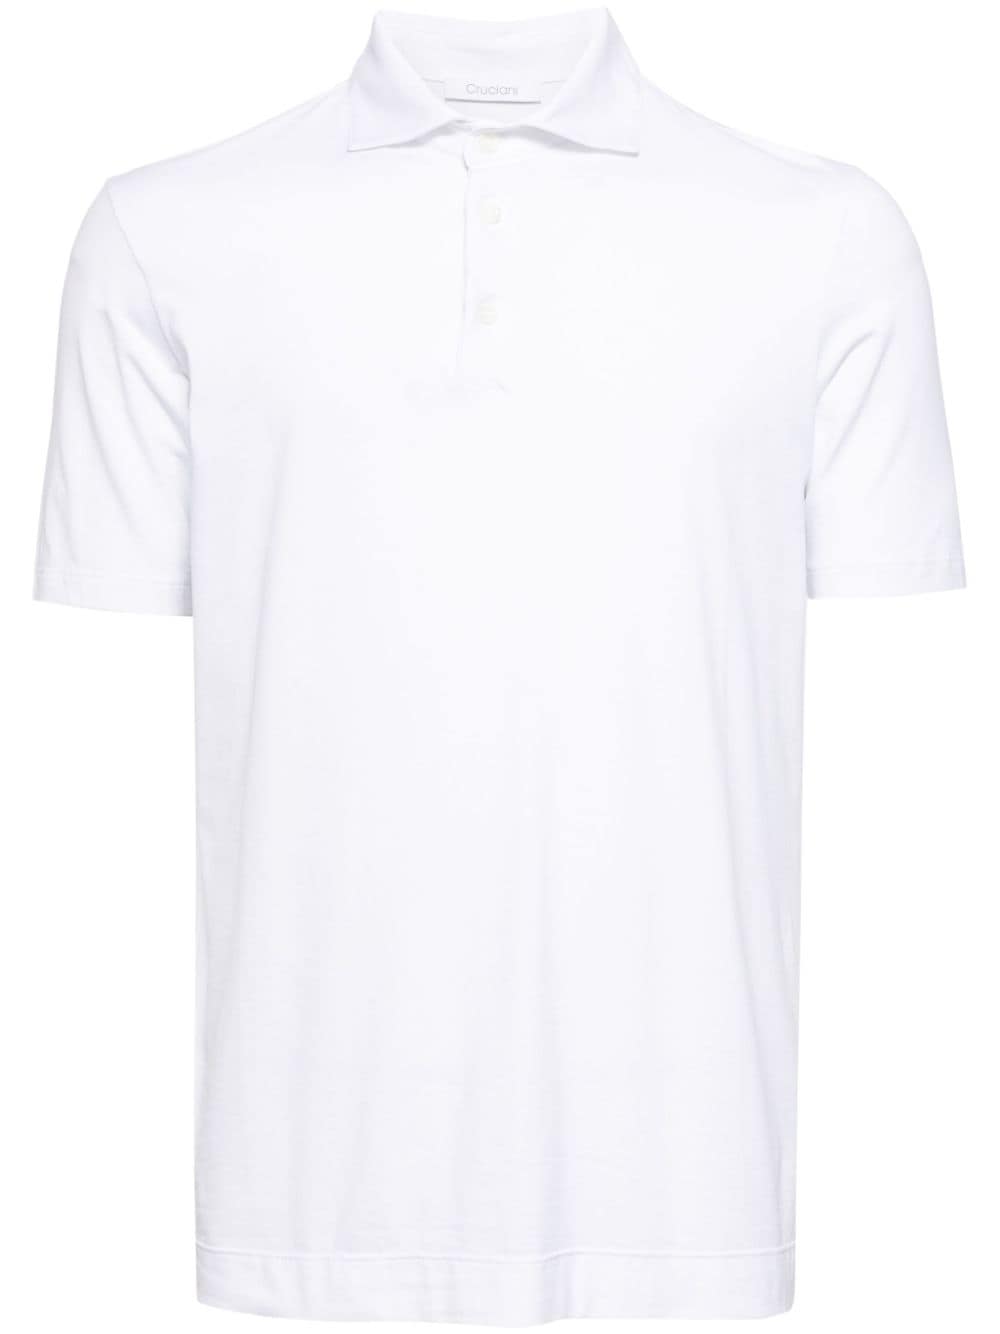 stretch-cotton polo shirt